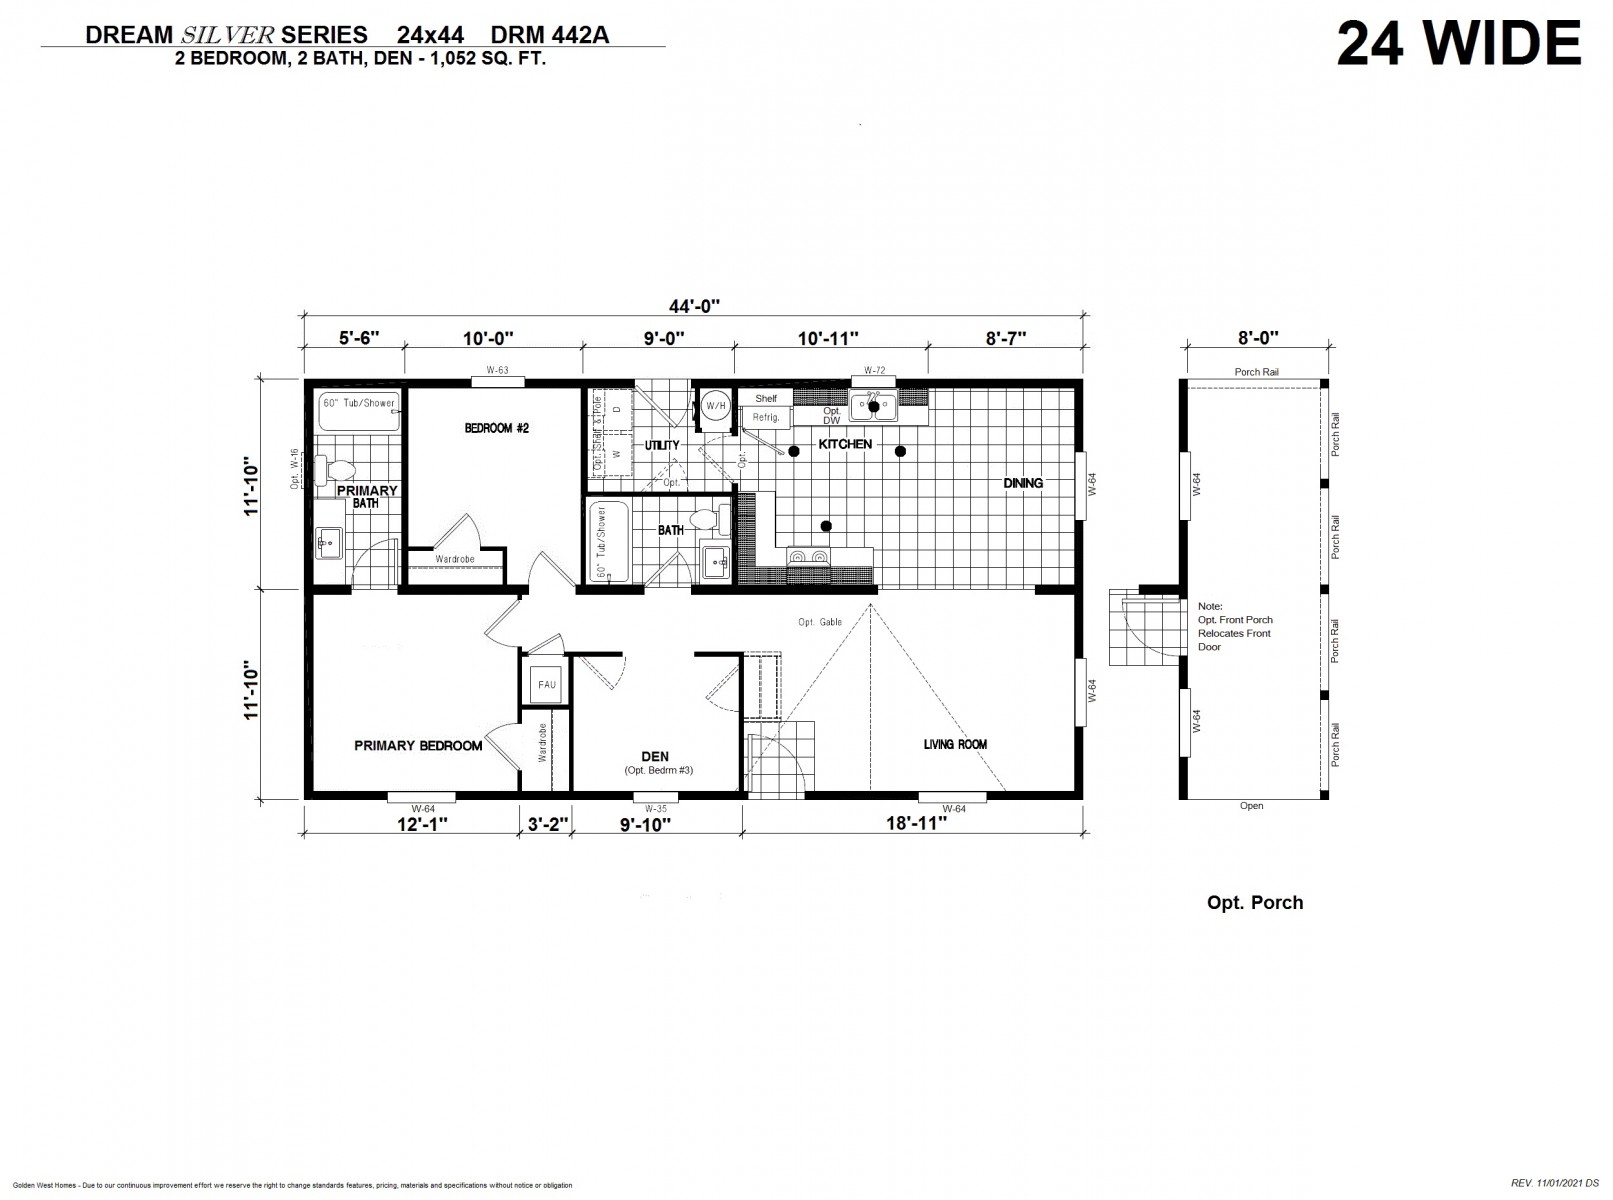 Homes Direct Modular Homes - Model DRM442A - Floorplan